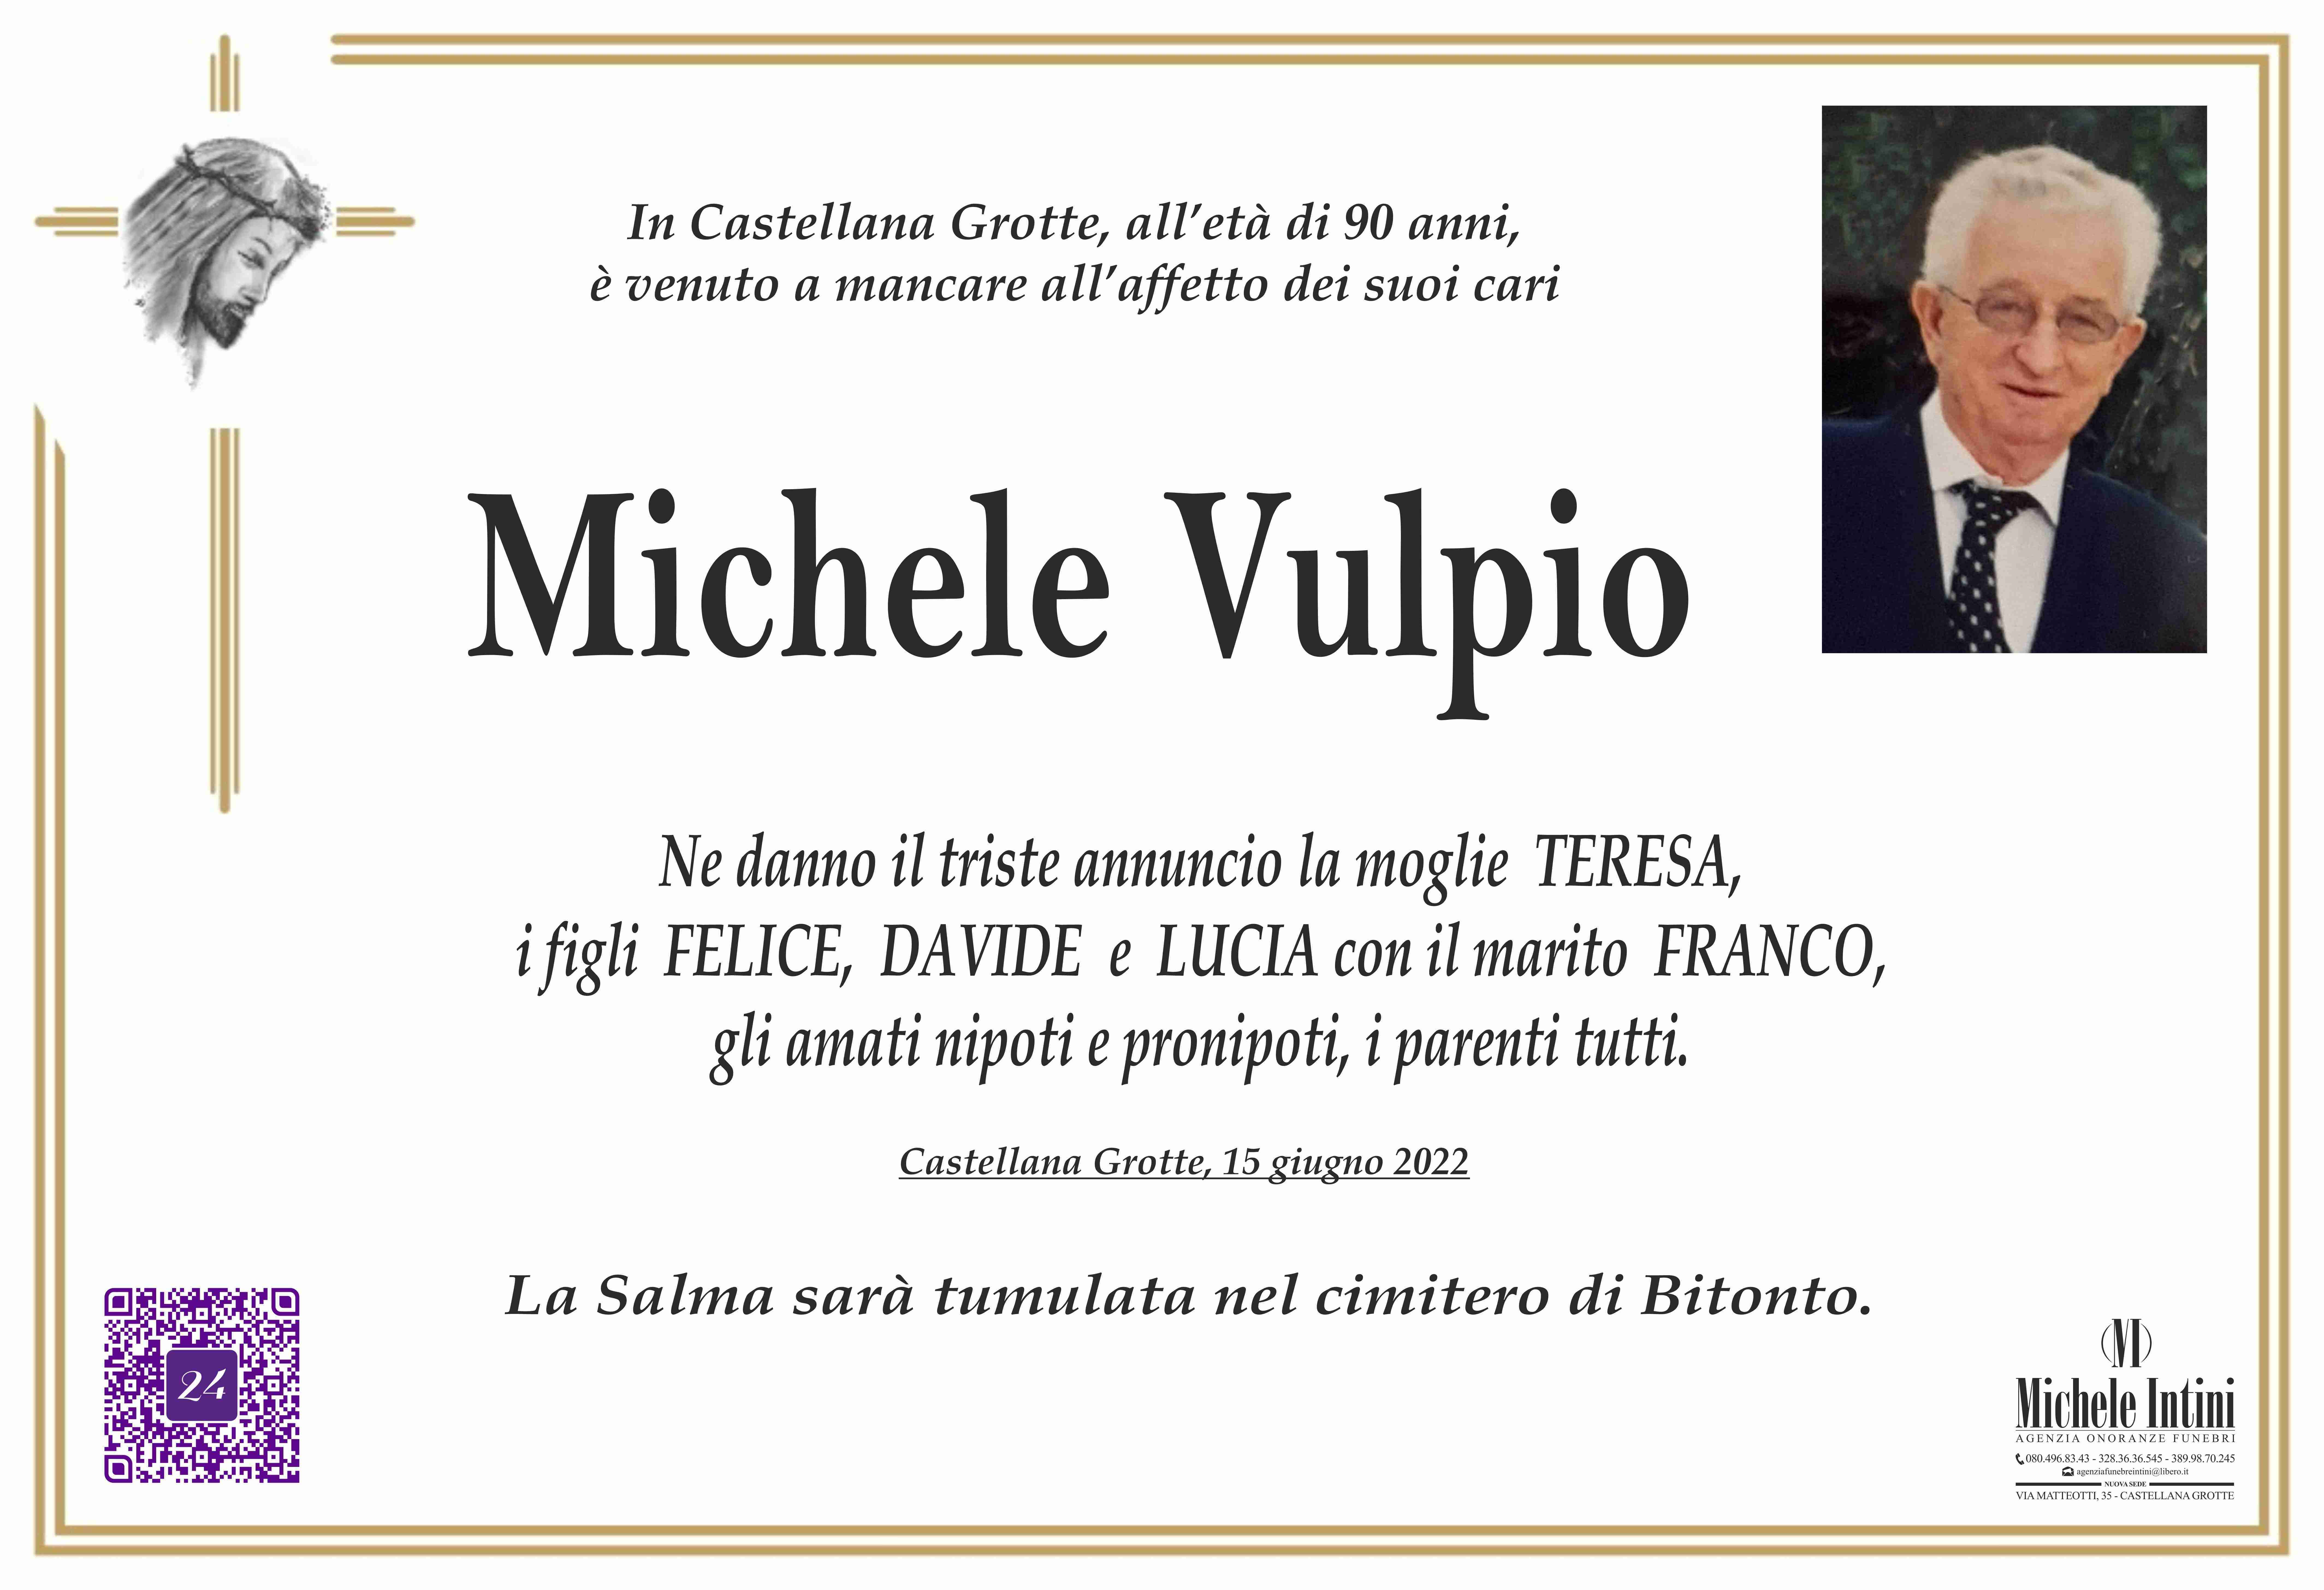 Michele Vulpio